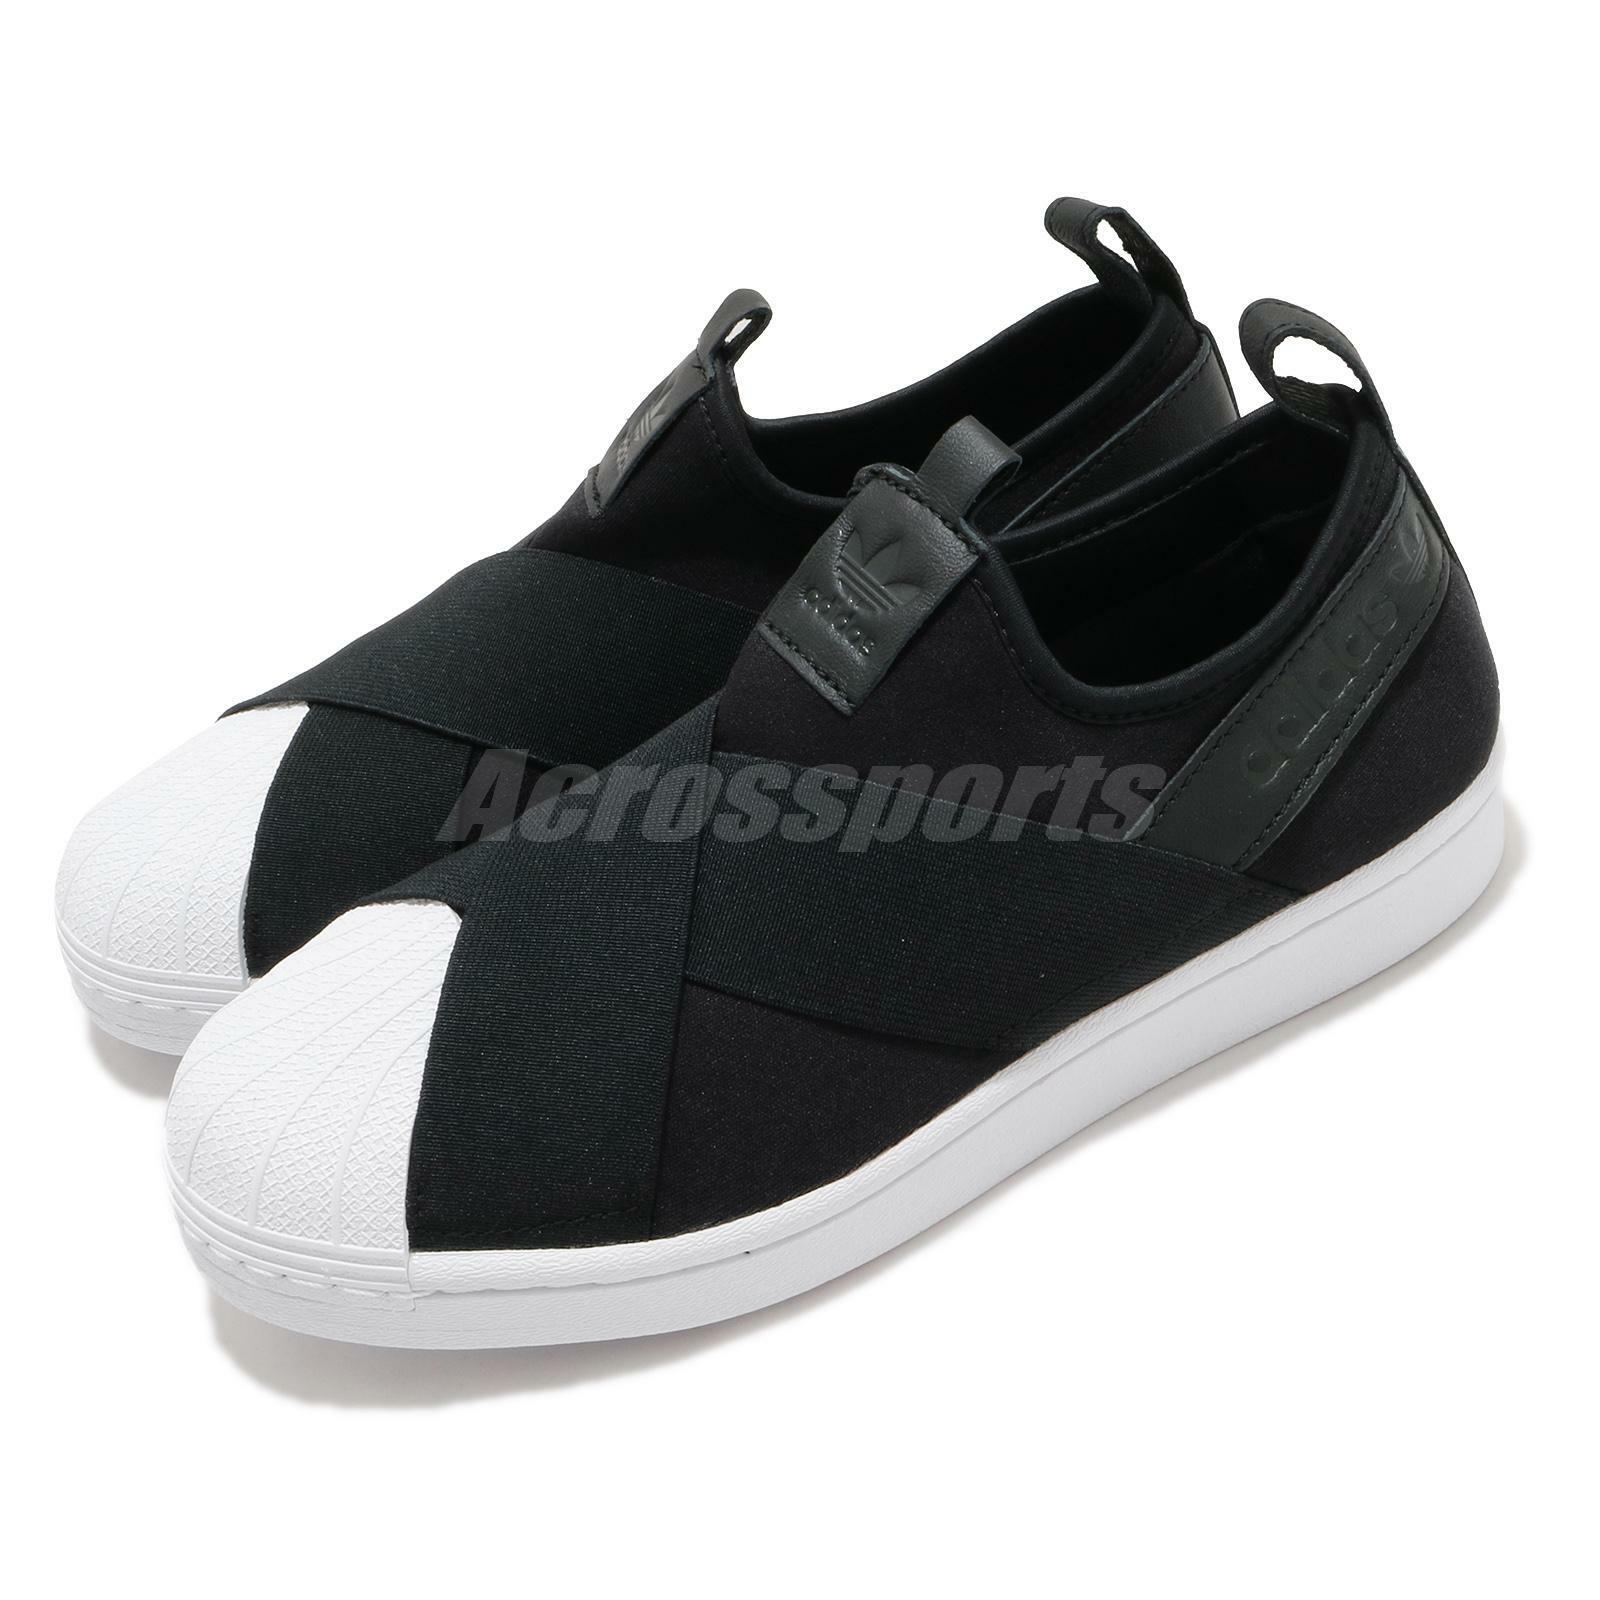 public overthrow Immunity adidas Originals Superstar Slip On Black White Men Unisex Casual Shoes  FW7051 | eBay